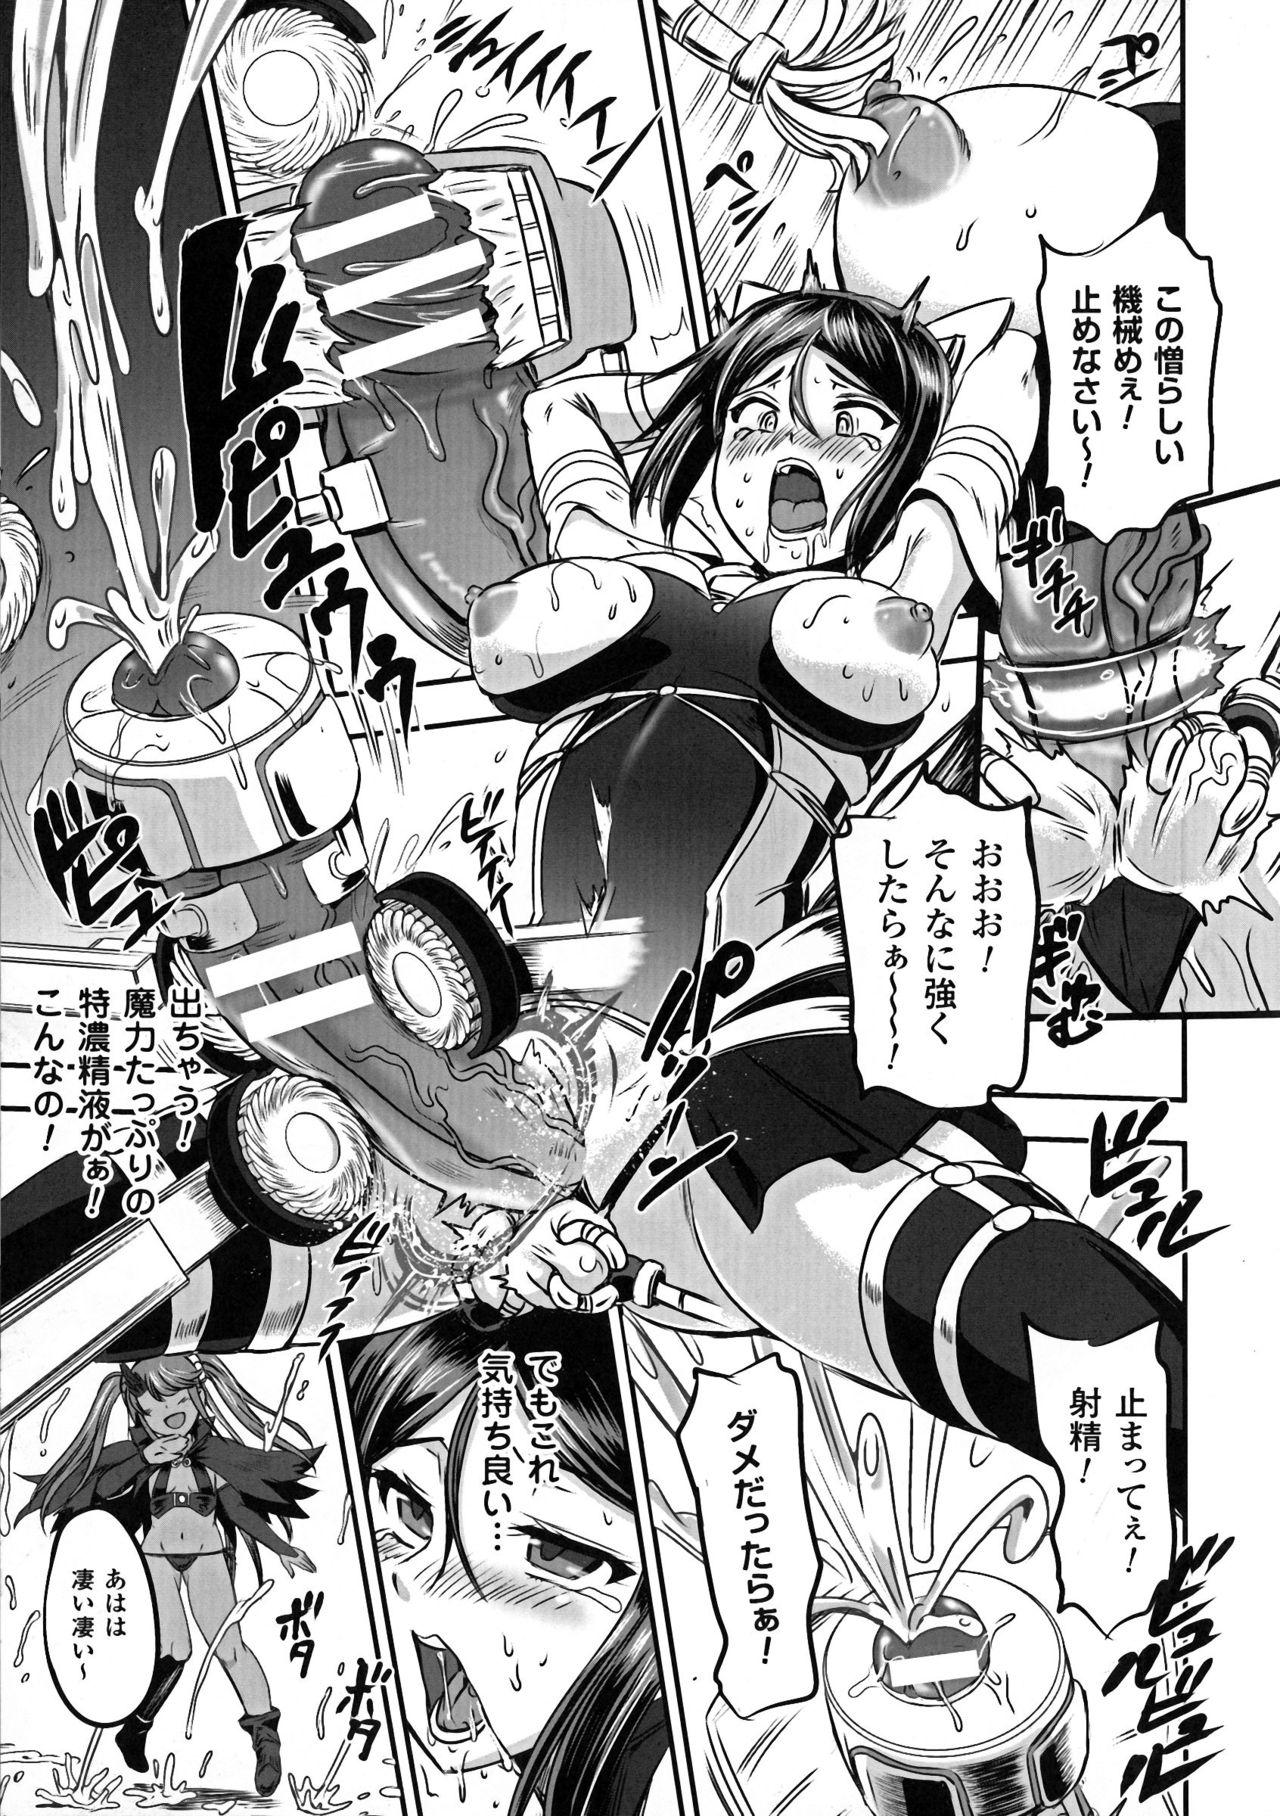 Seigi no Heroine Kangoku File DX vol. 5 150